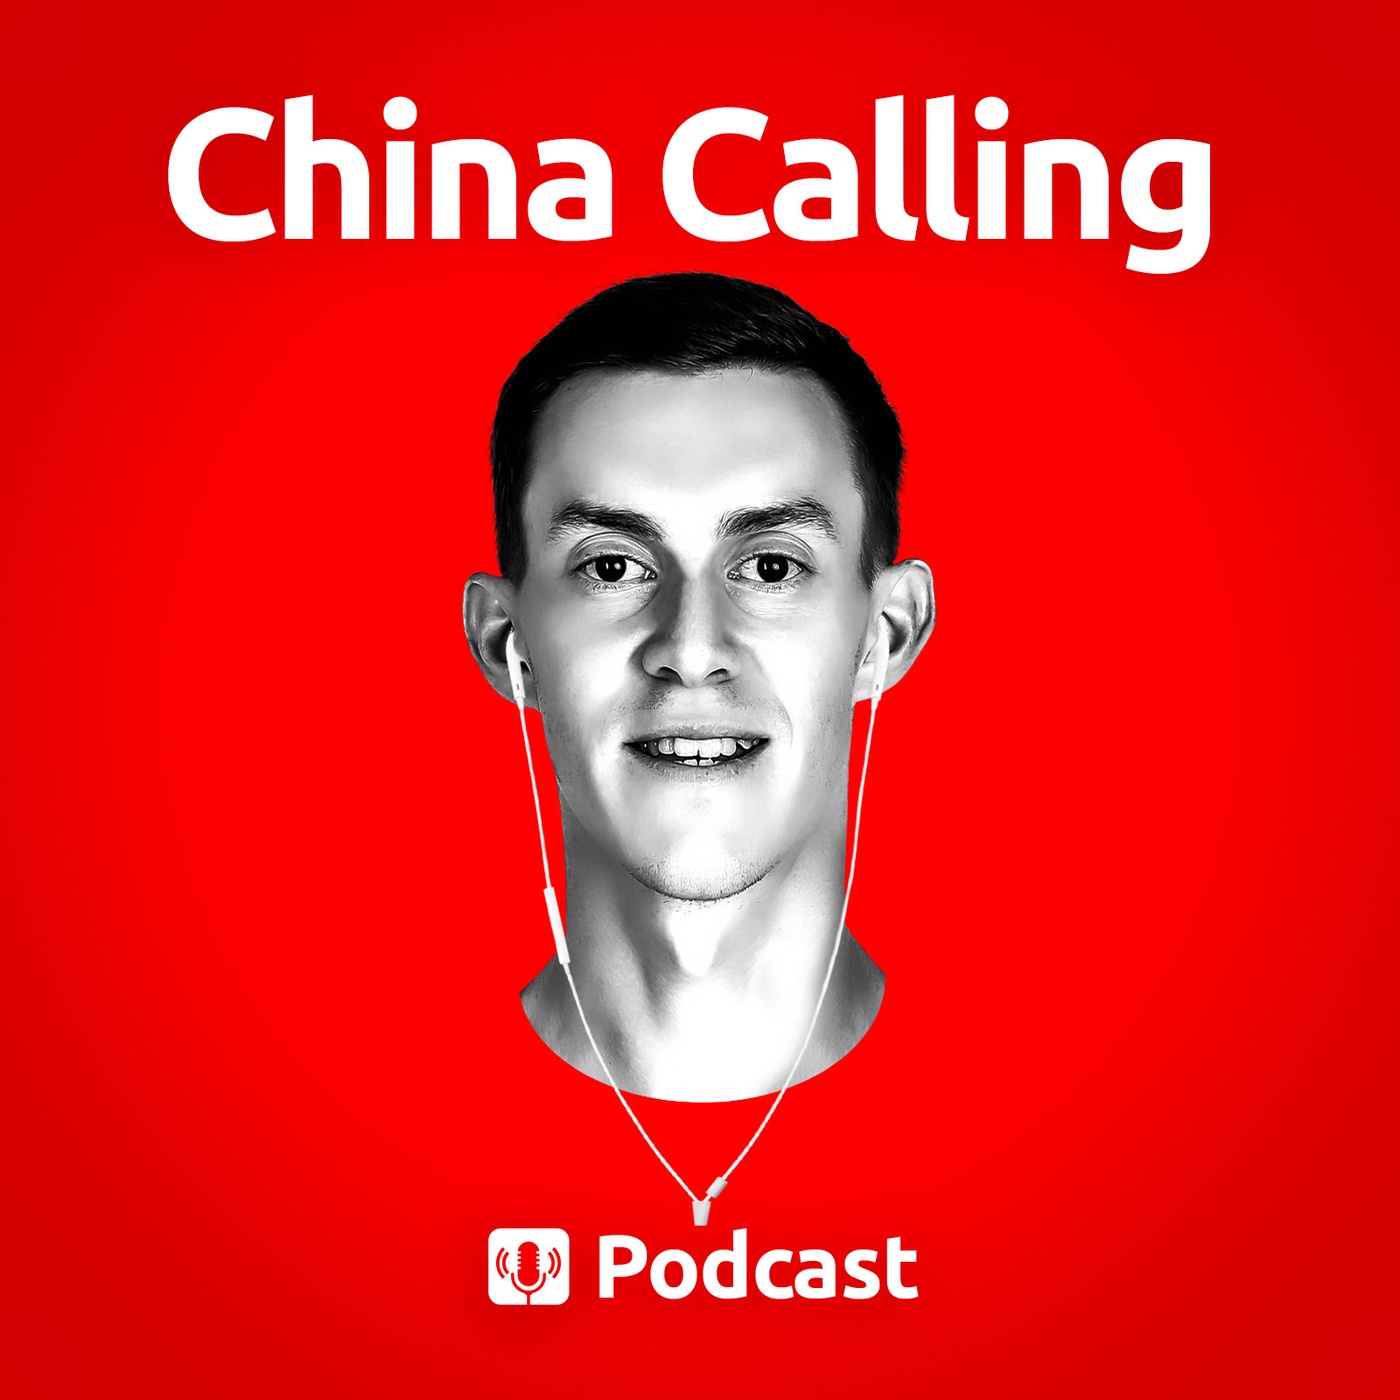 China Calling